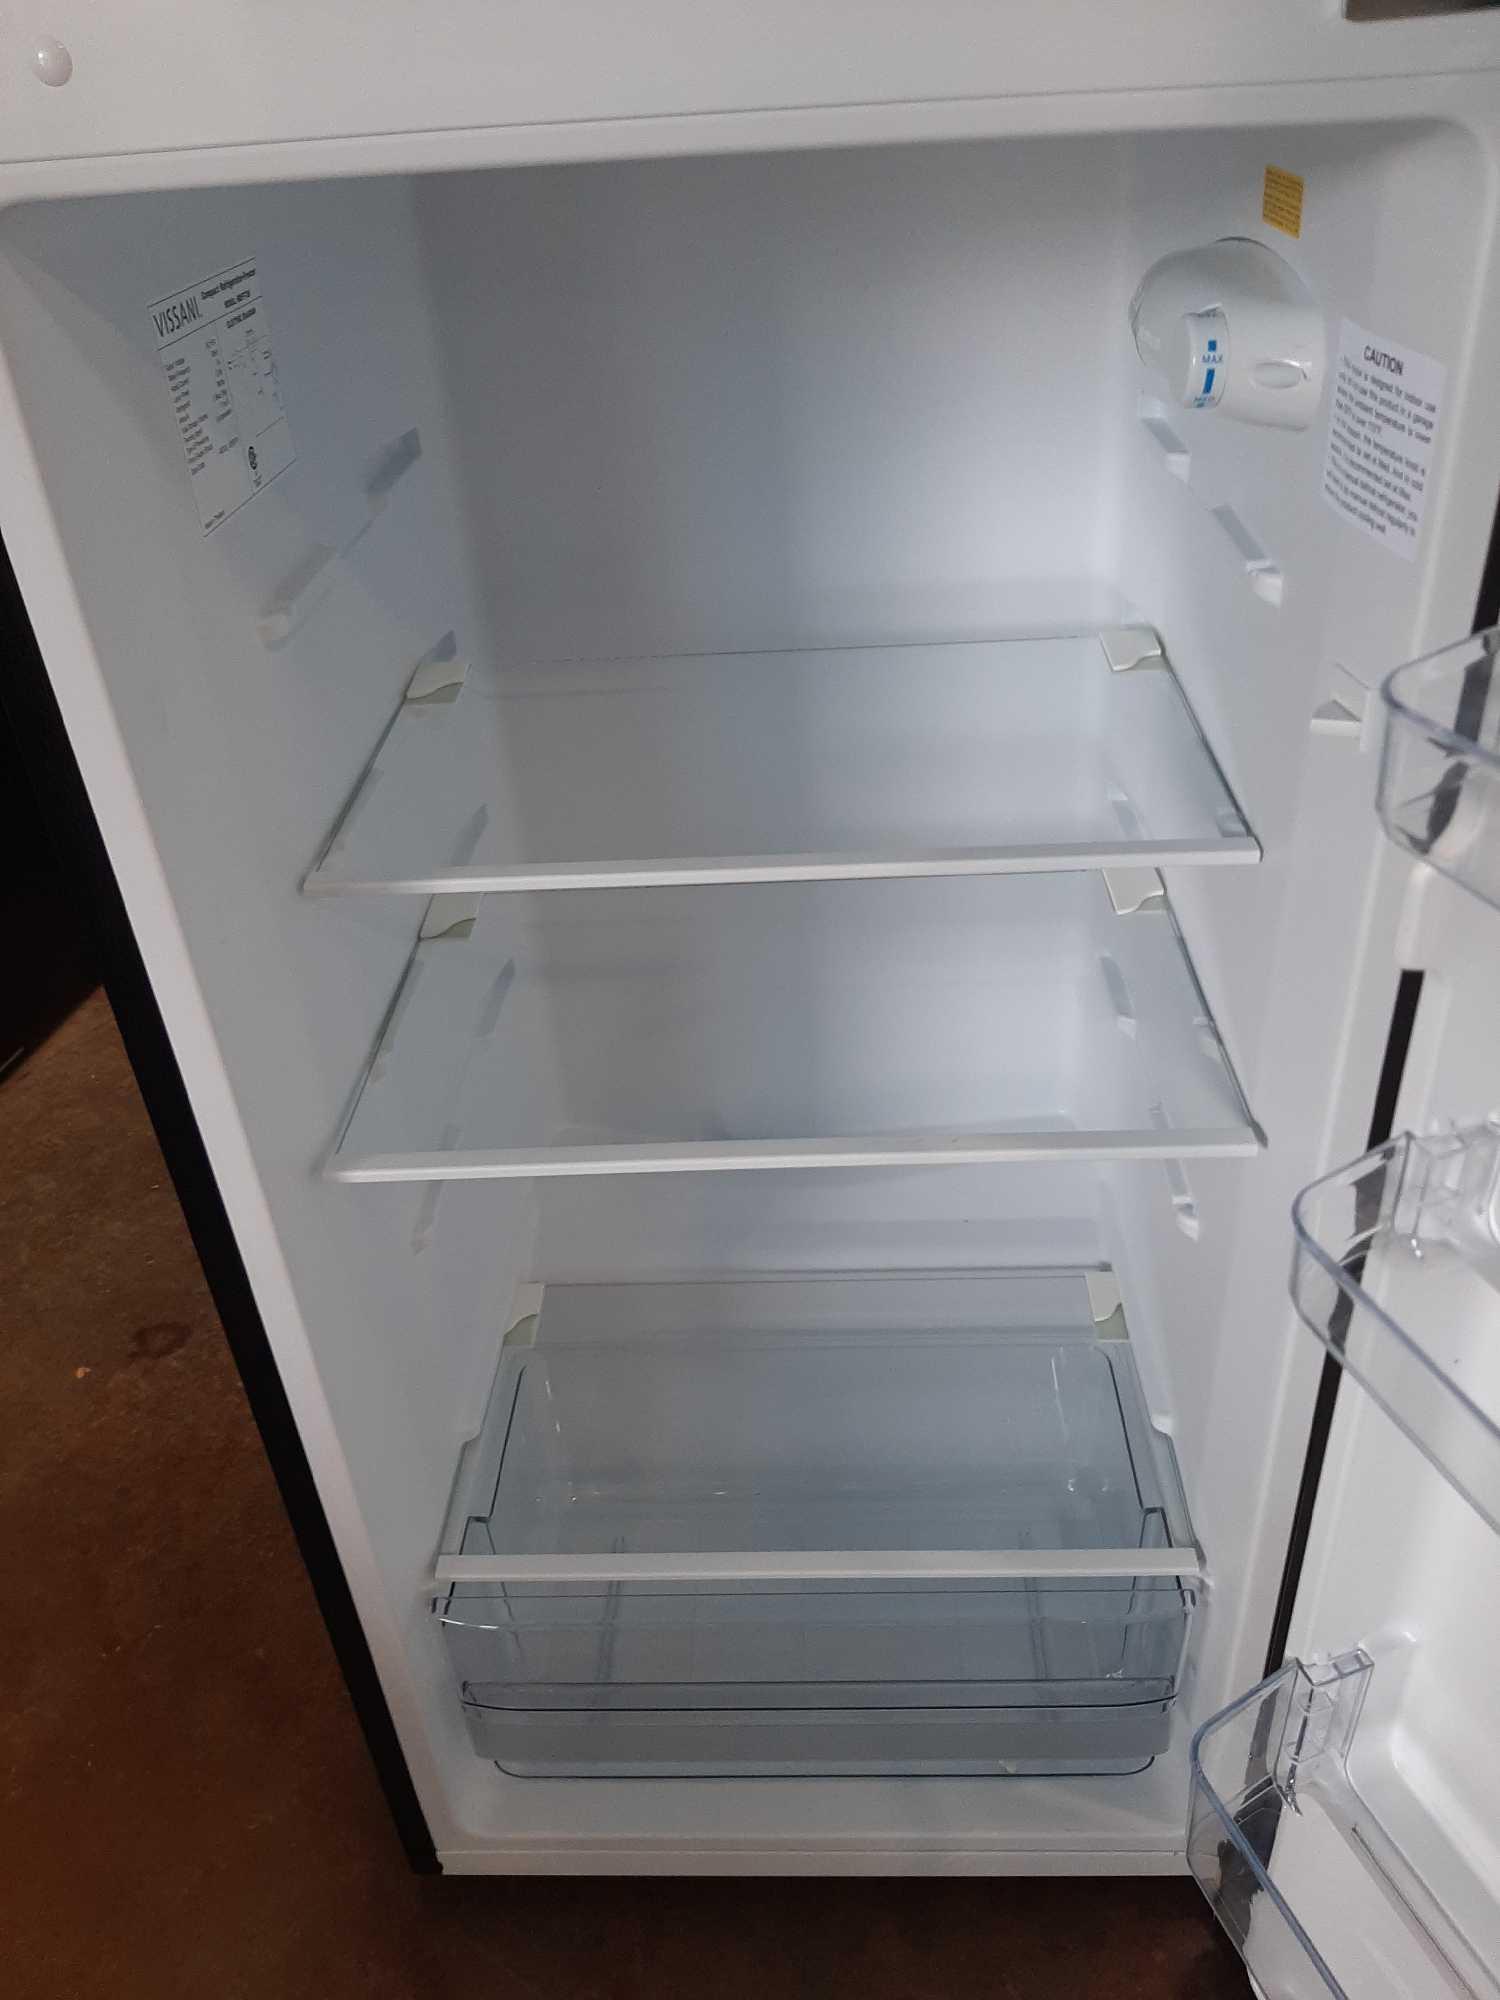 VISSANI 7.1 cu. ft. Top Freezer Refrigerator*COLD*PREVIOUSLY INSTALLED*